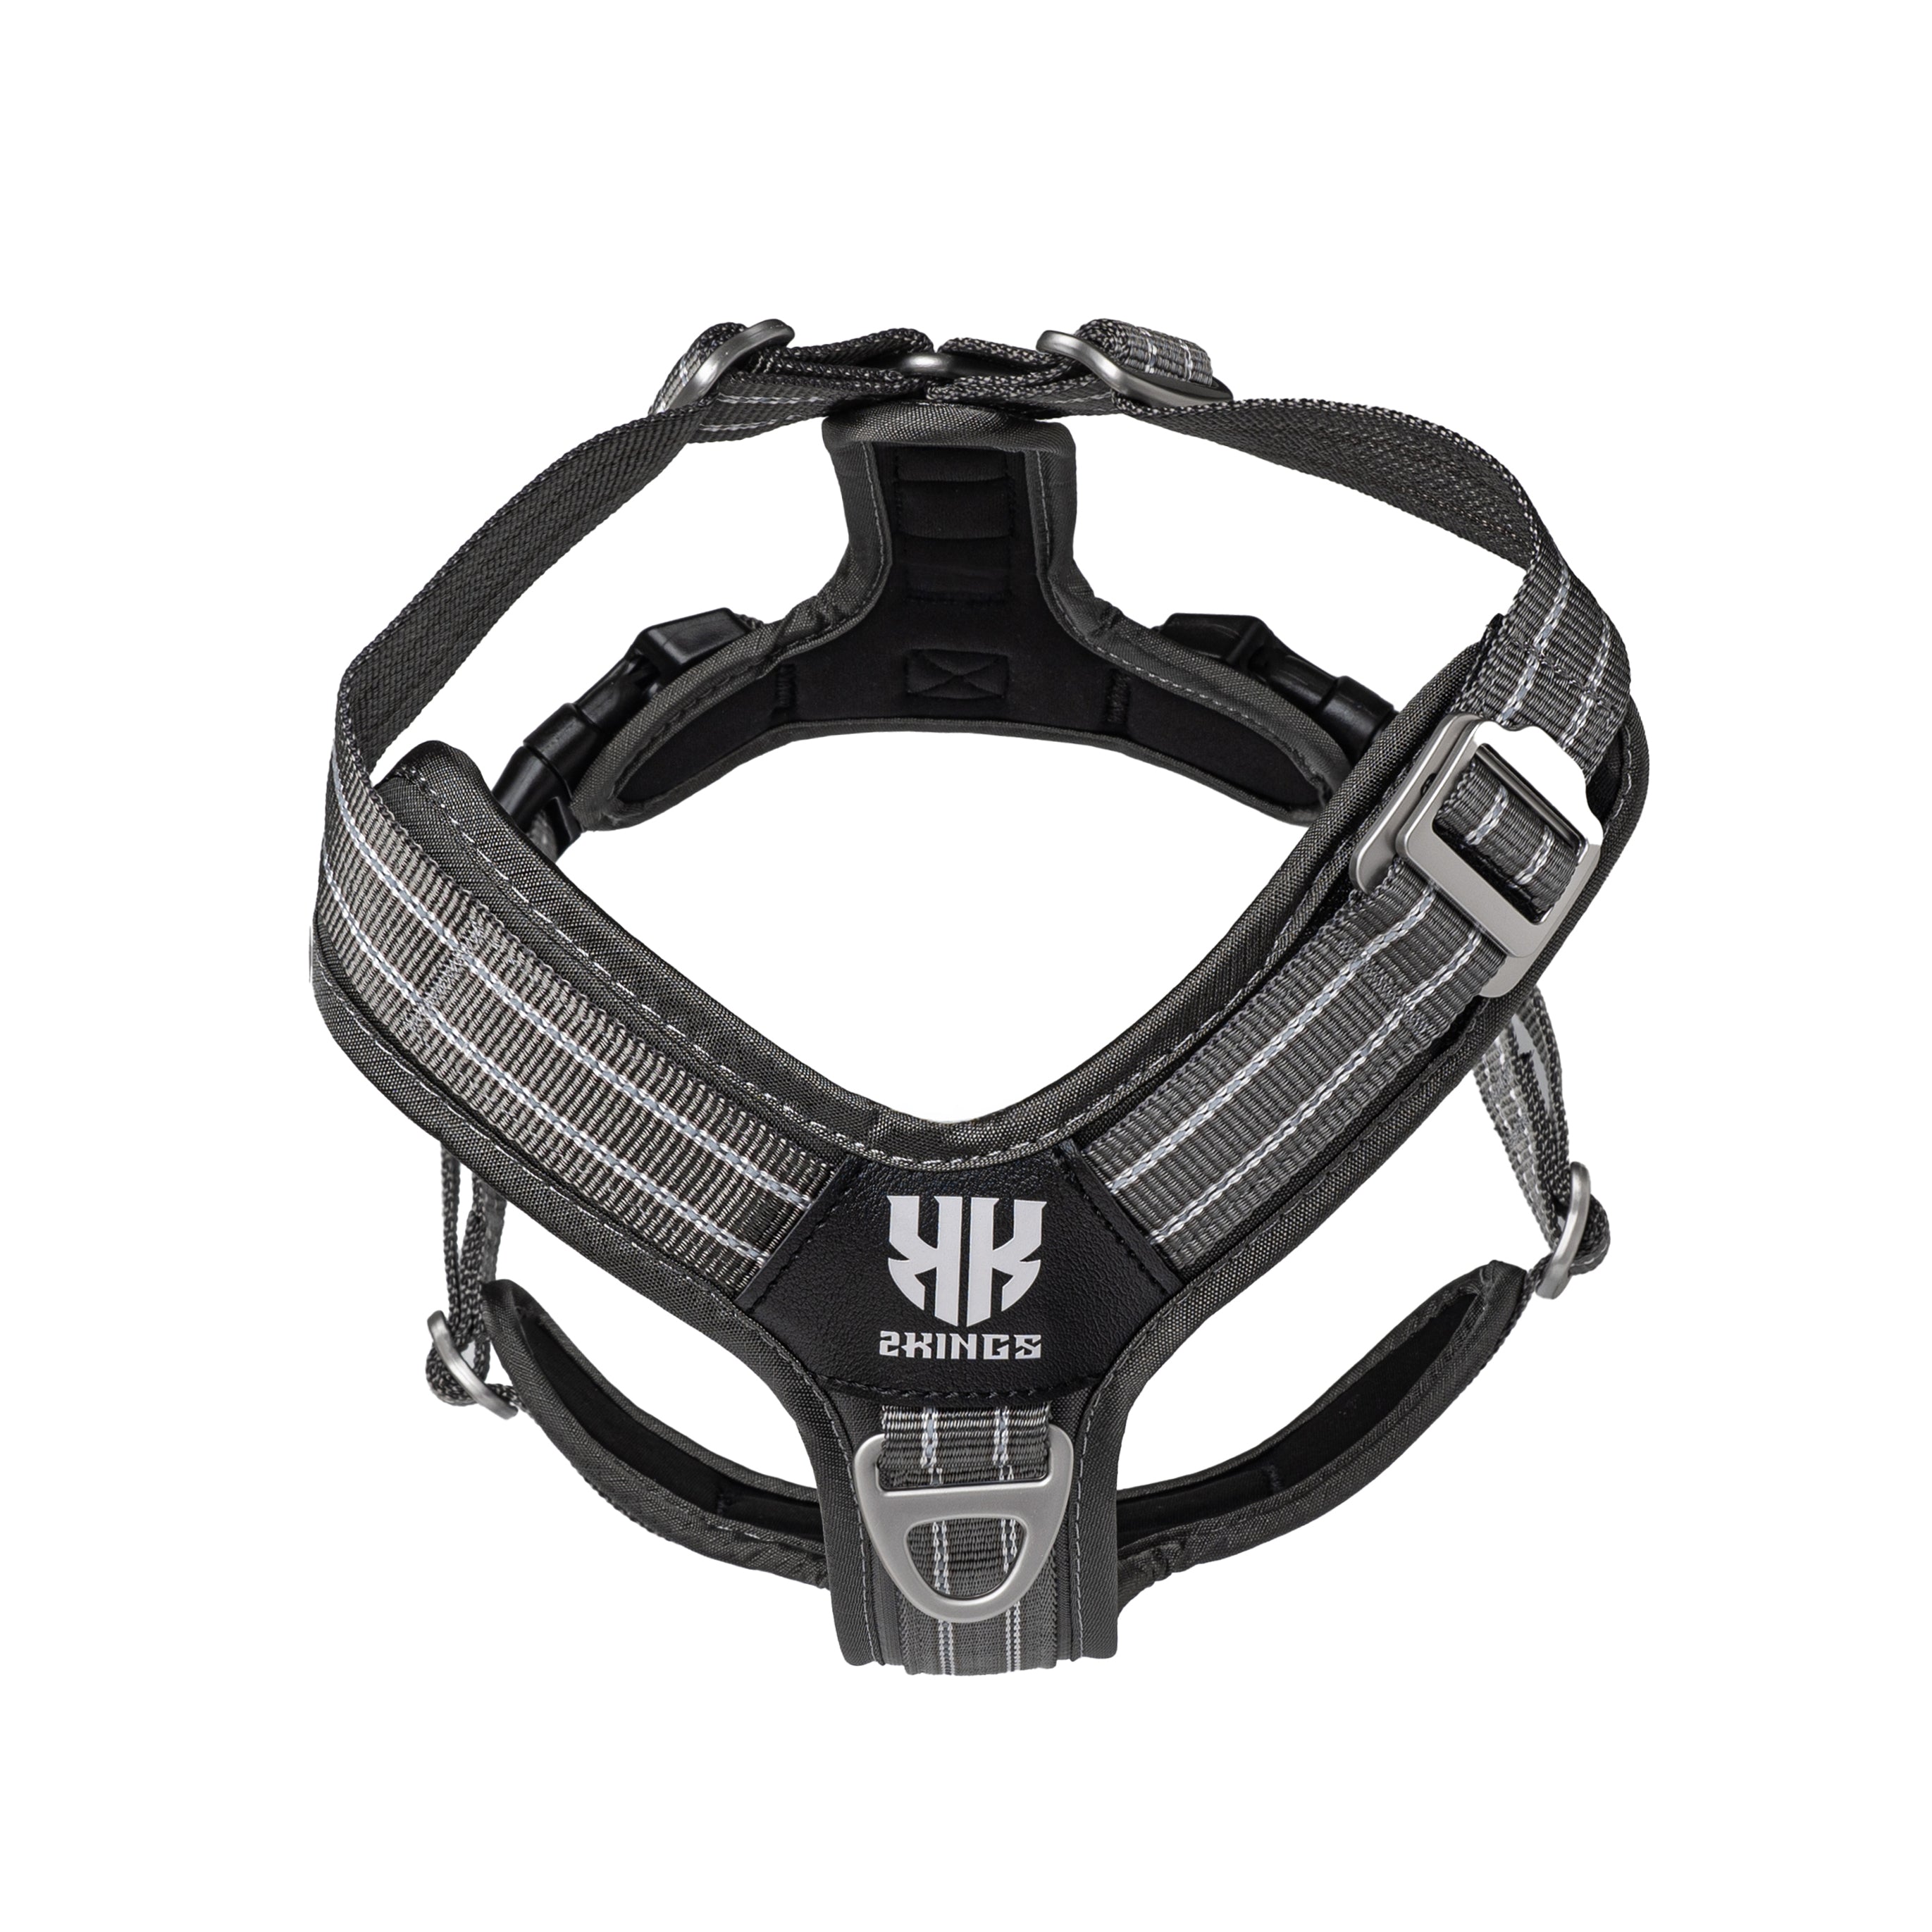 FlexiFit Reflective Dog Harness - Lightweight & Adjustable - Grey.